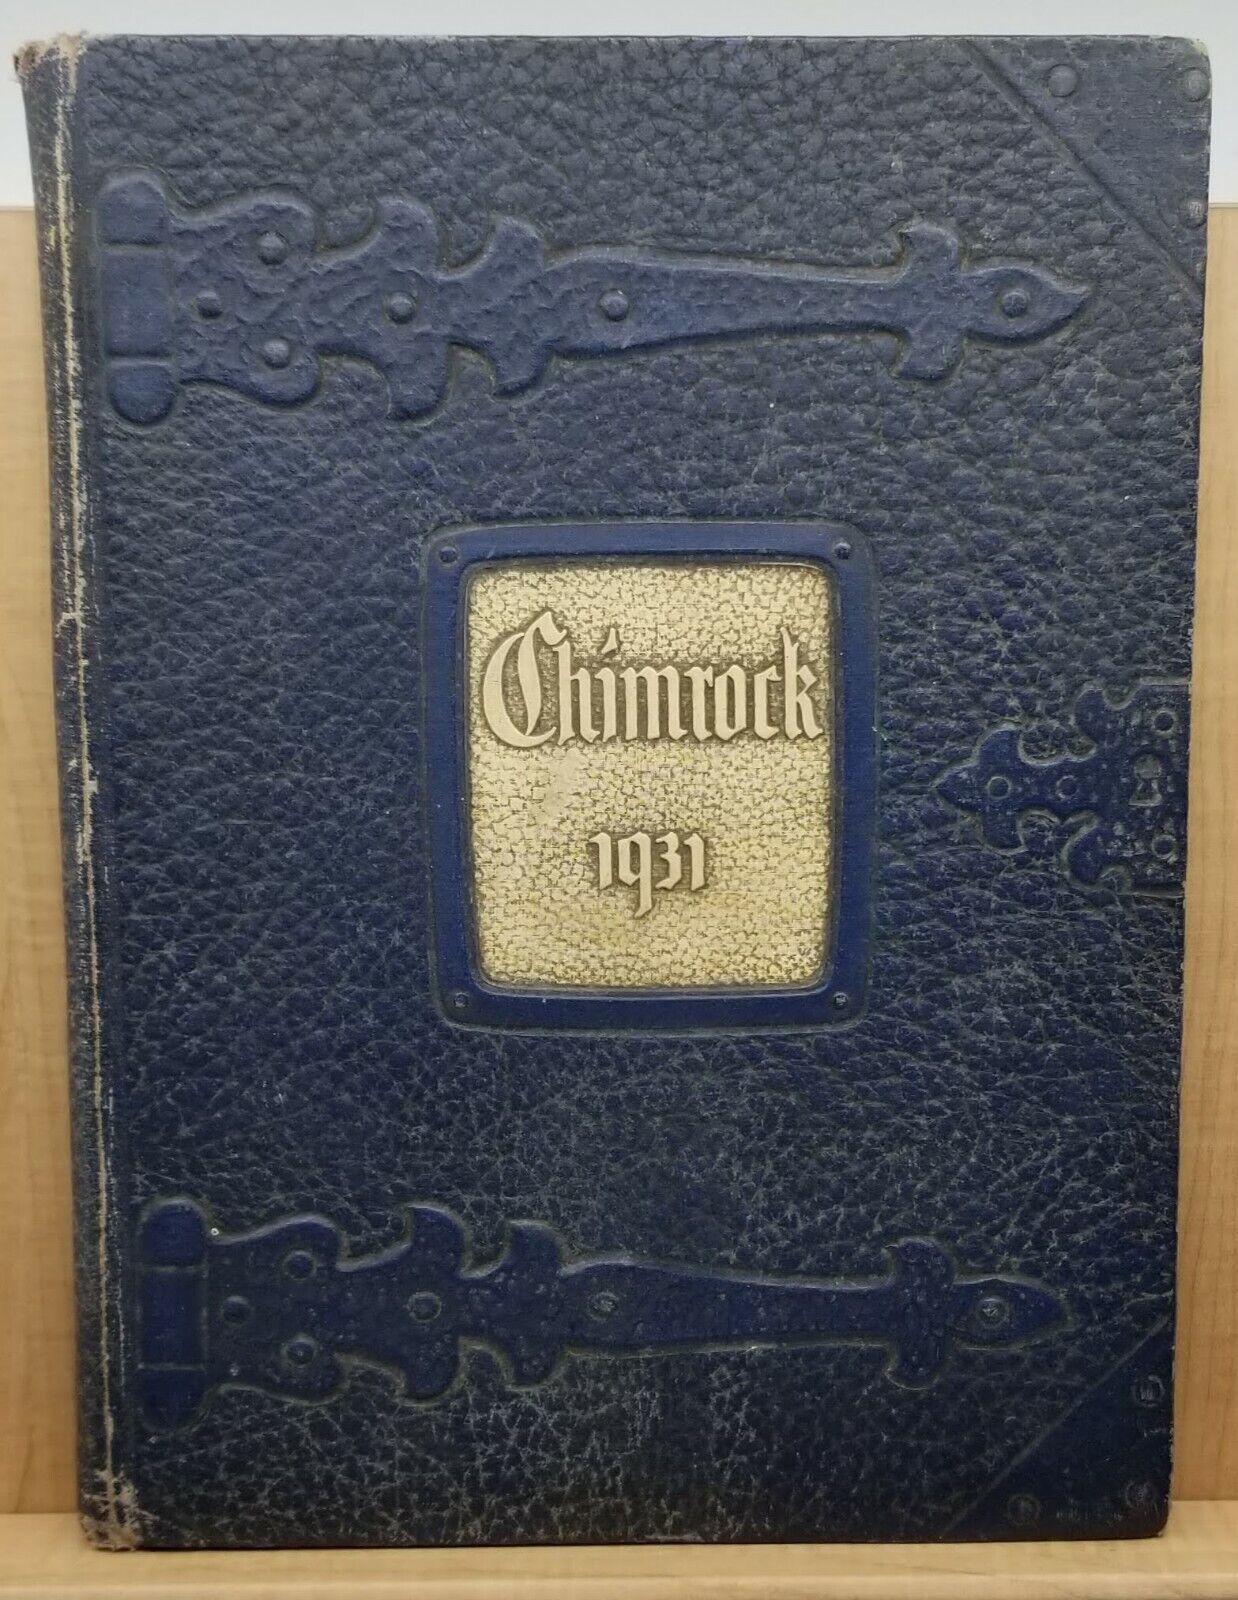 The 1931 Chimrock Hollidaysburg Pa High School Yearbook Pennsylvania.